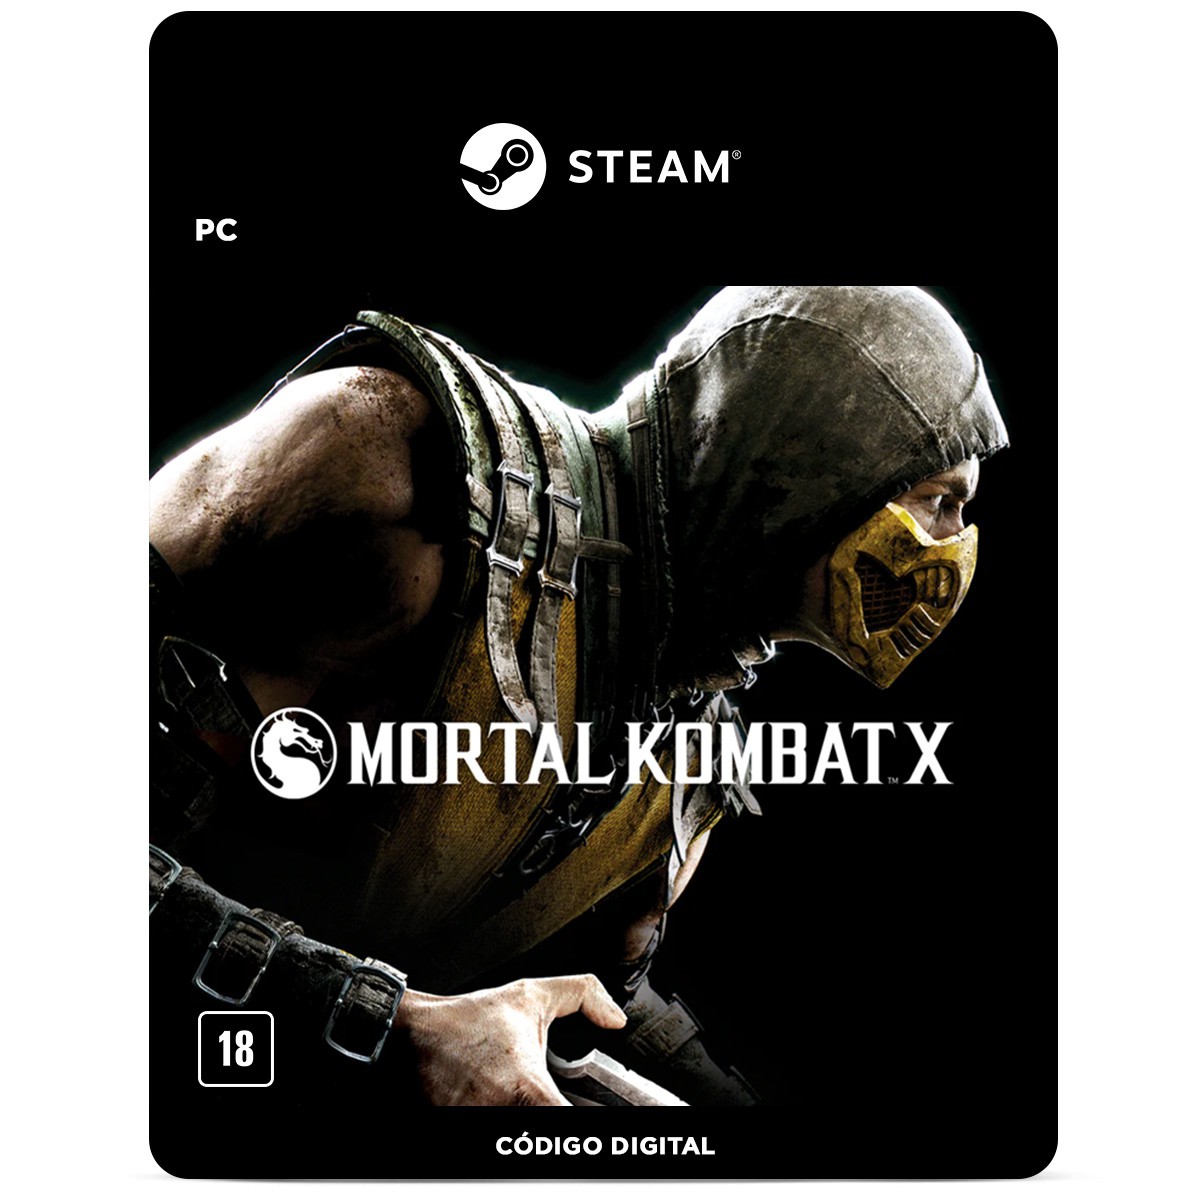 Confira os requisitos mínimos para Mortal Kombat X no PC